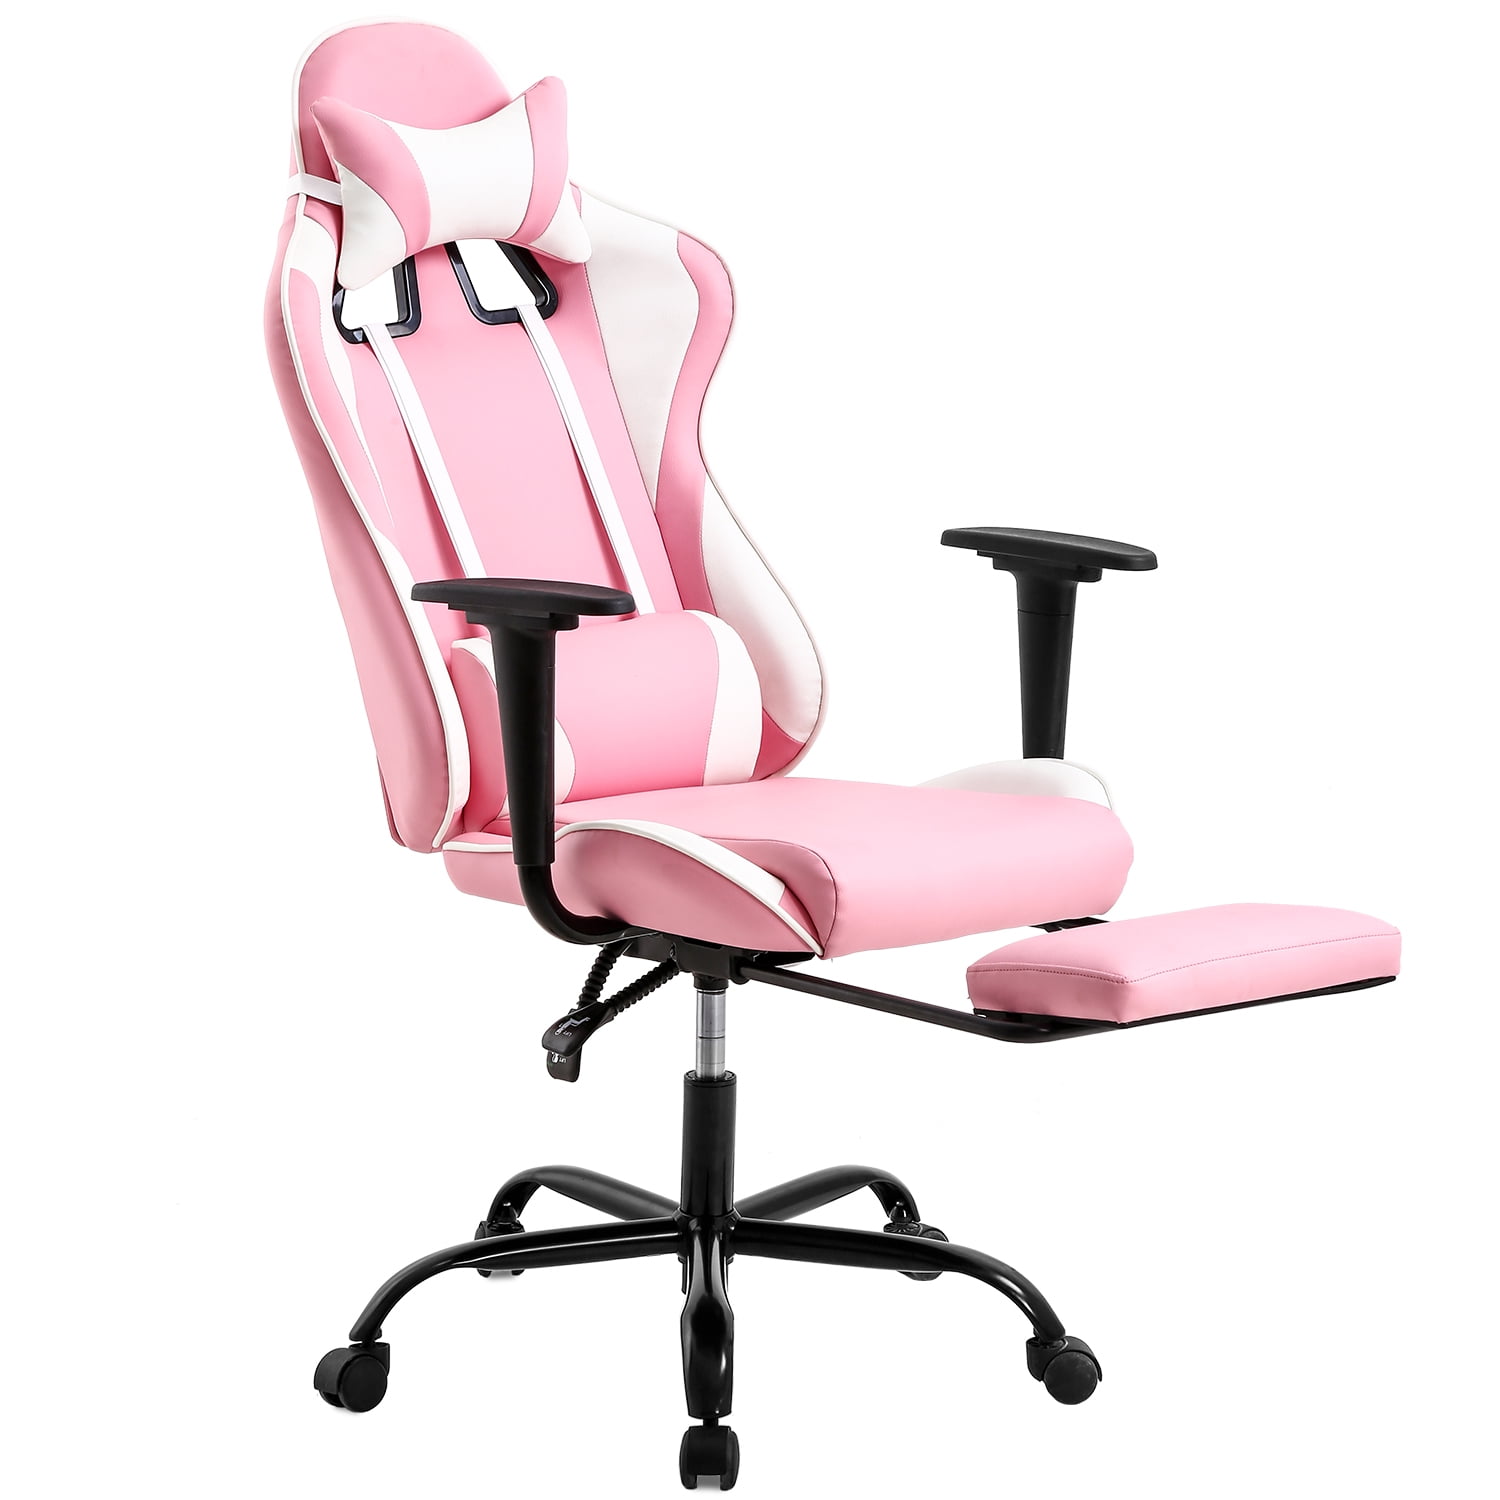  Pink Computer Chair Walmart 